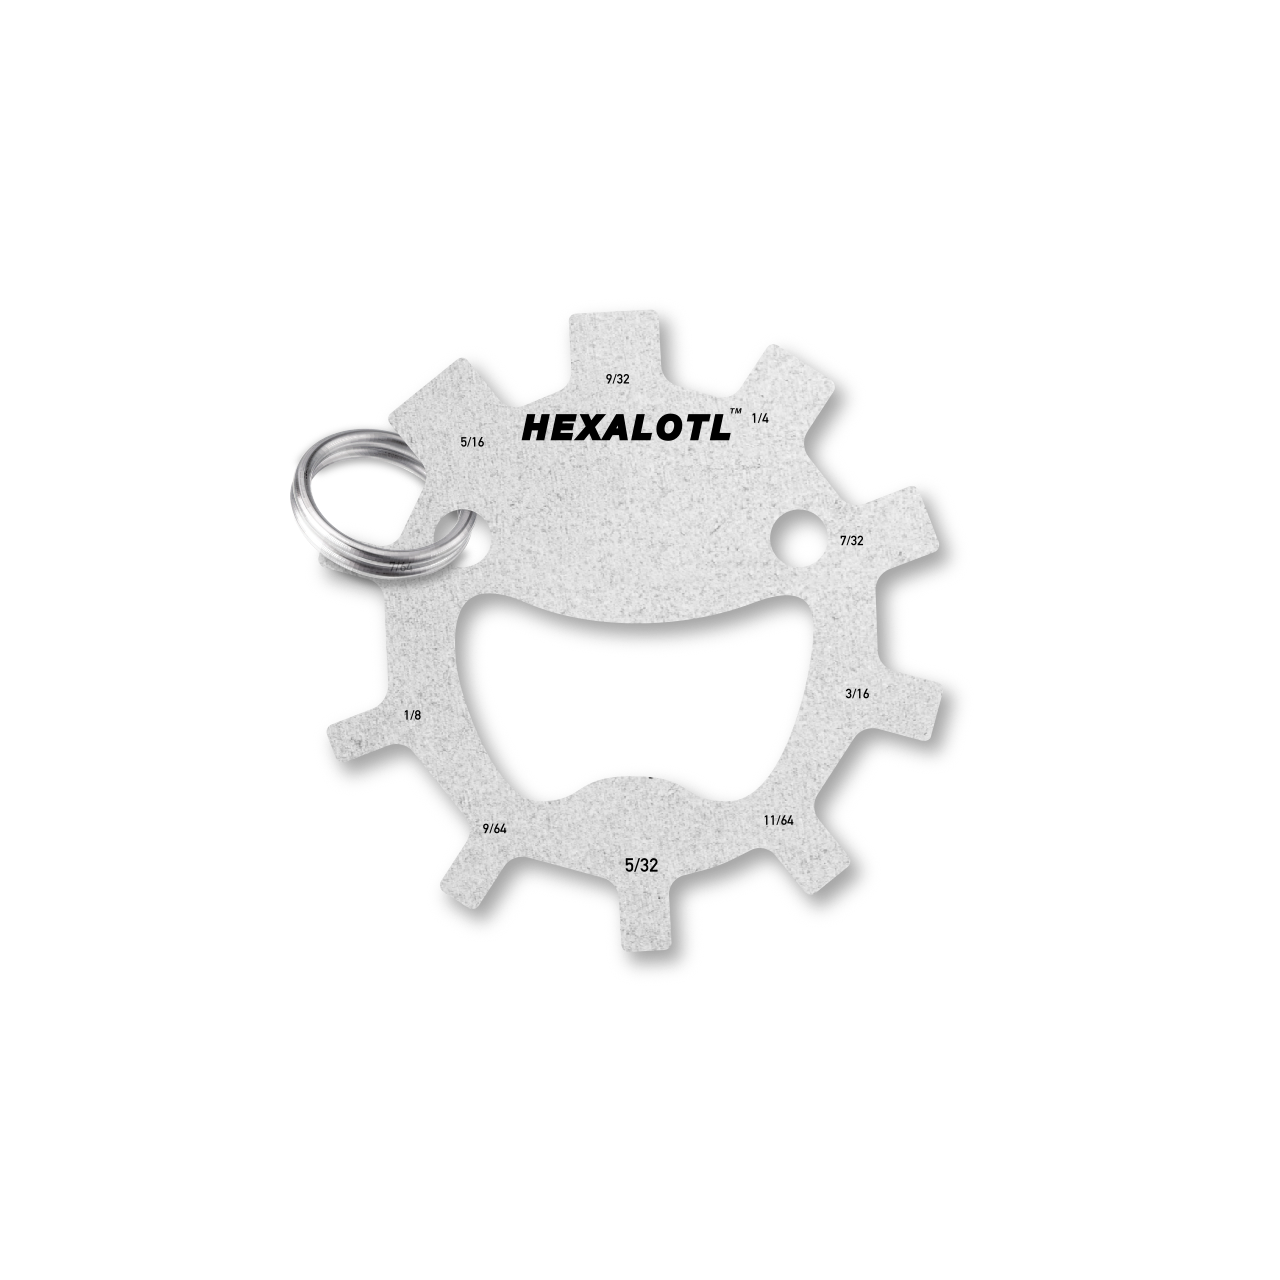 Hexalotl™ 11-in-1 Hex-Key Set: US Standard